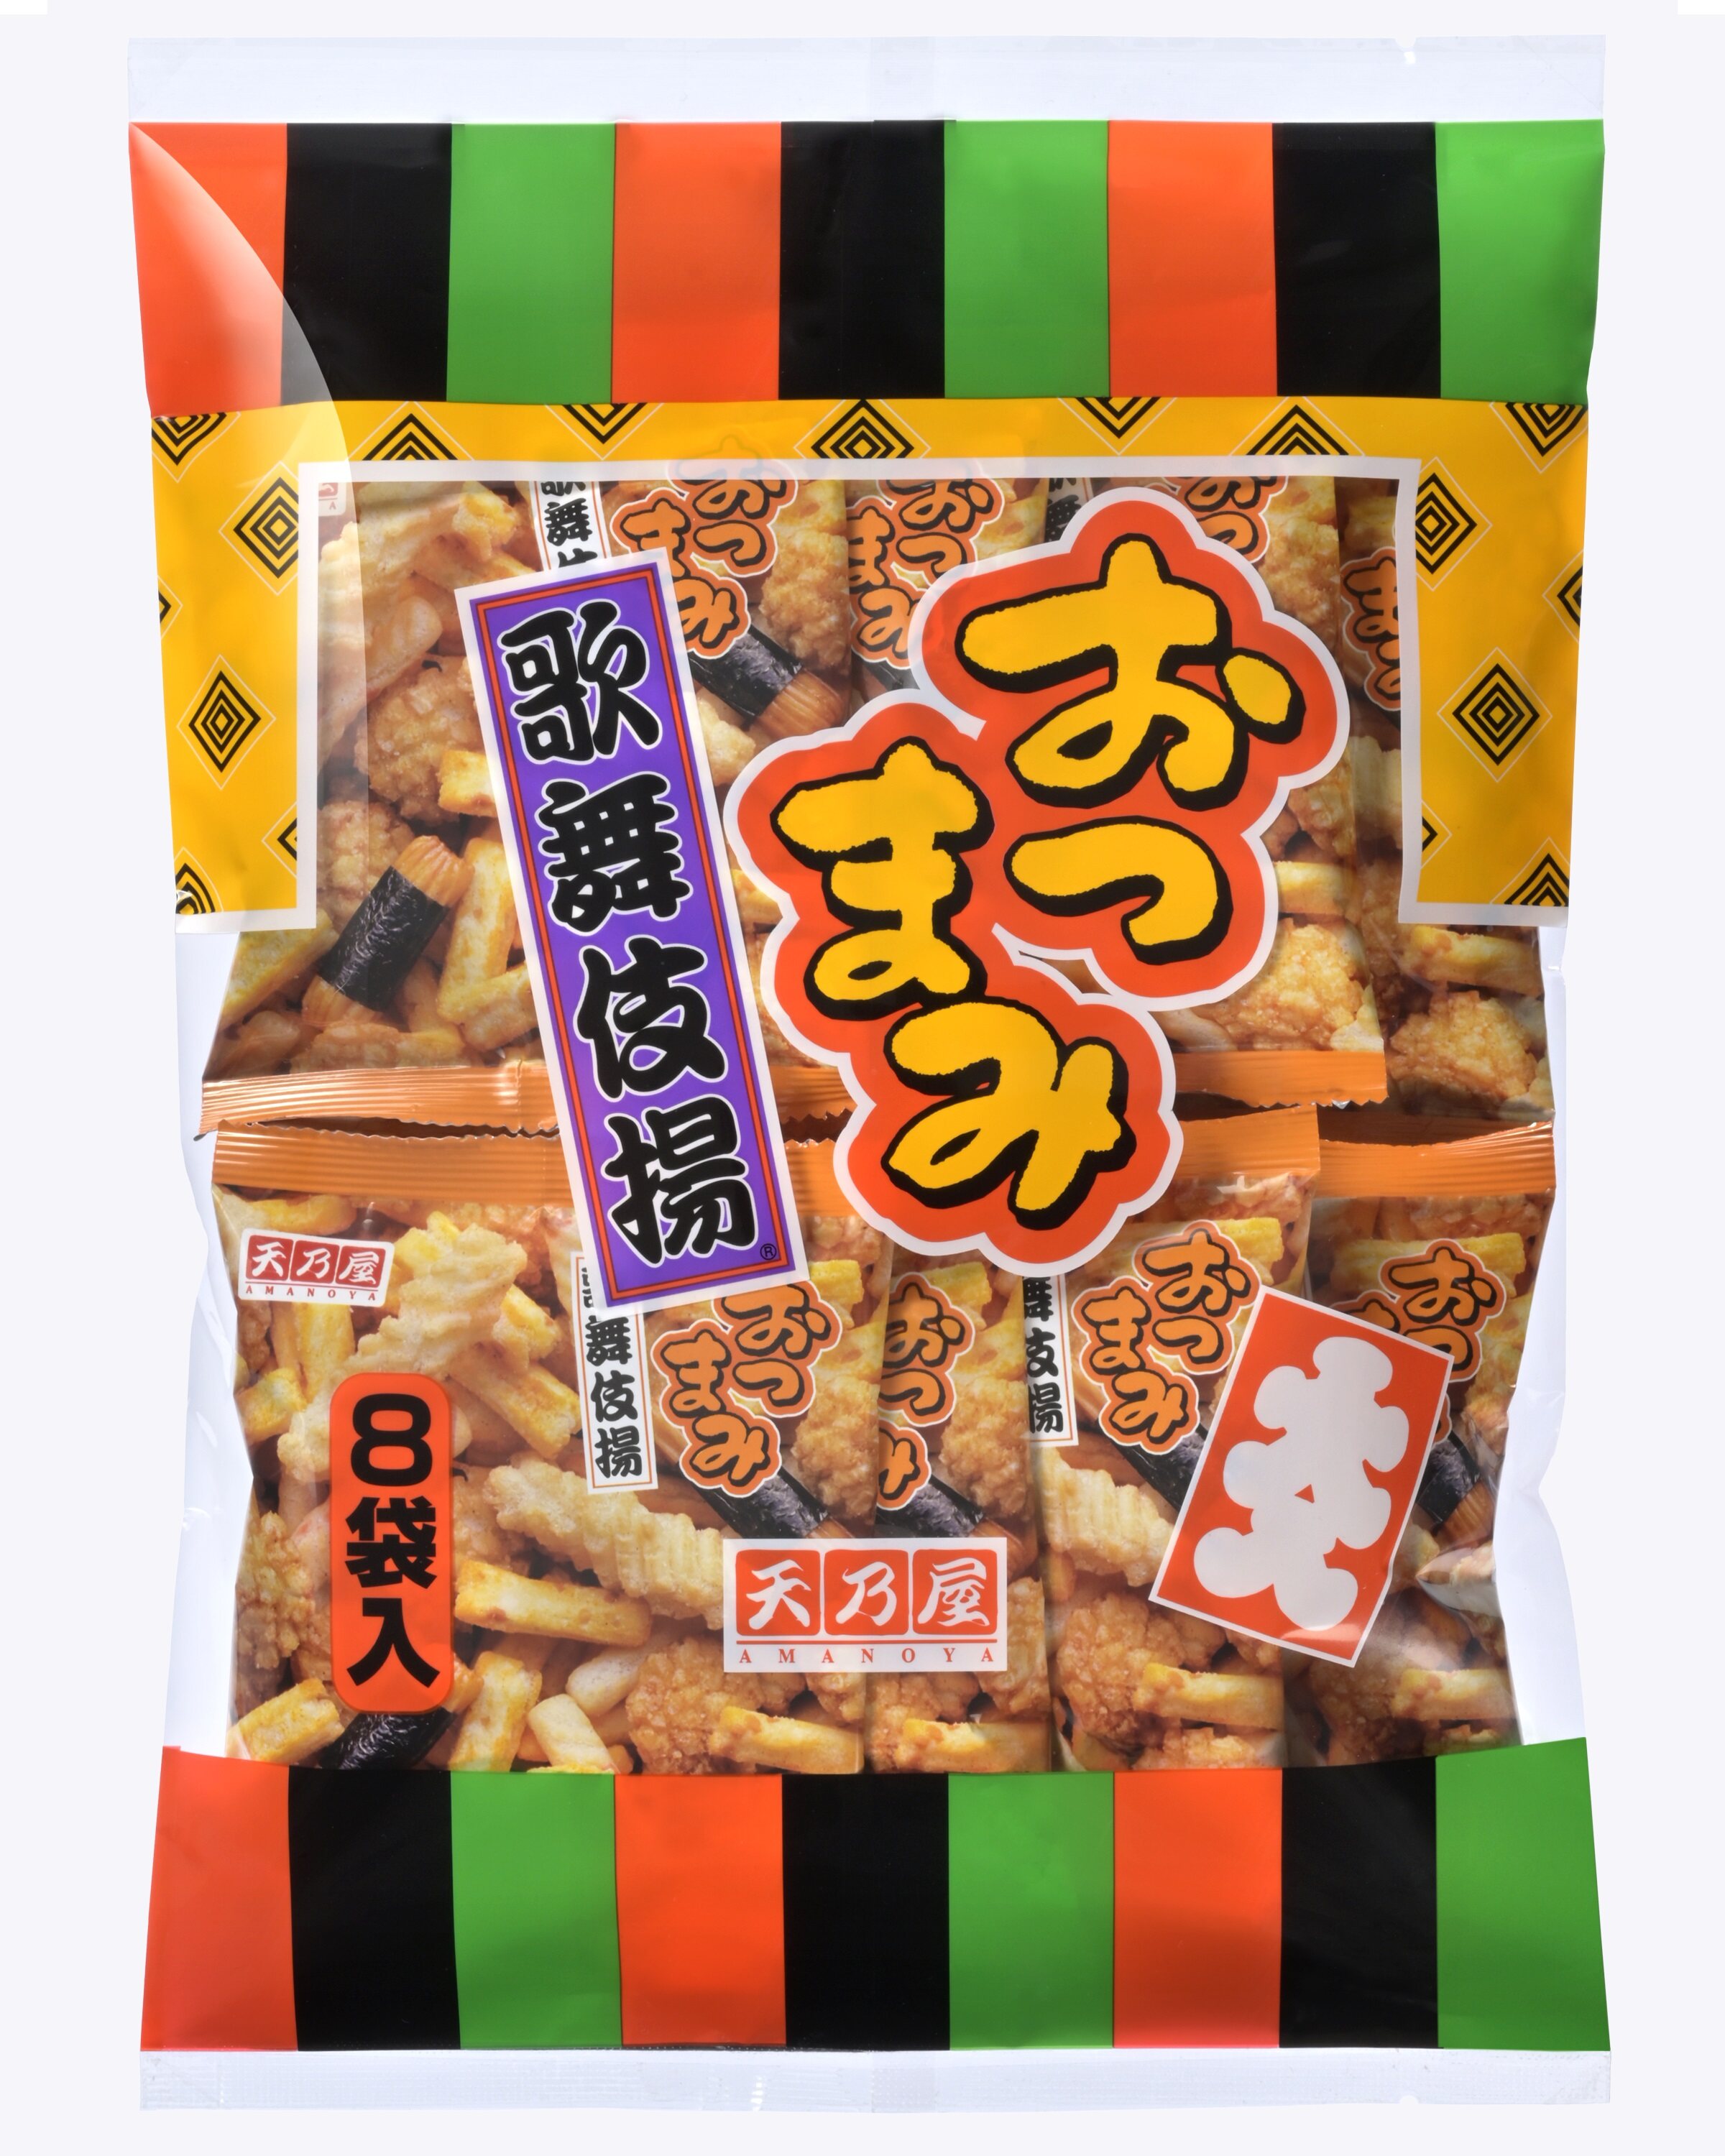 AMANOYA Senbei Rice Cracker - TANOSHIYA